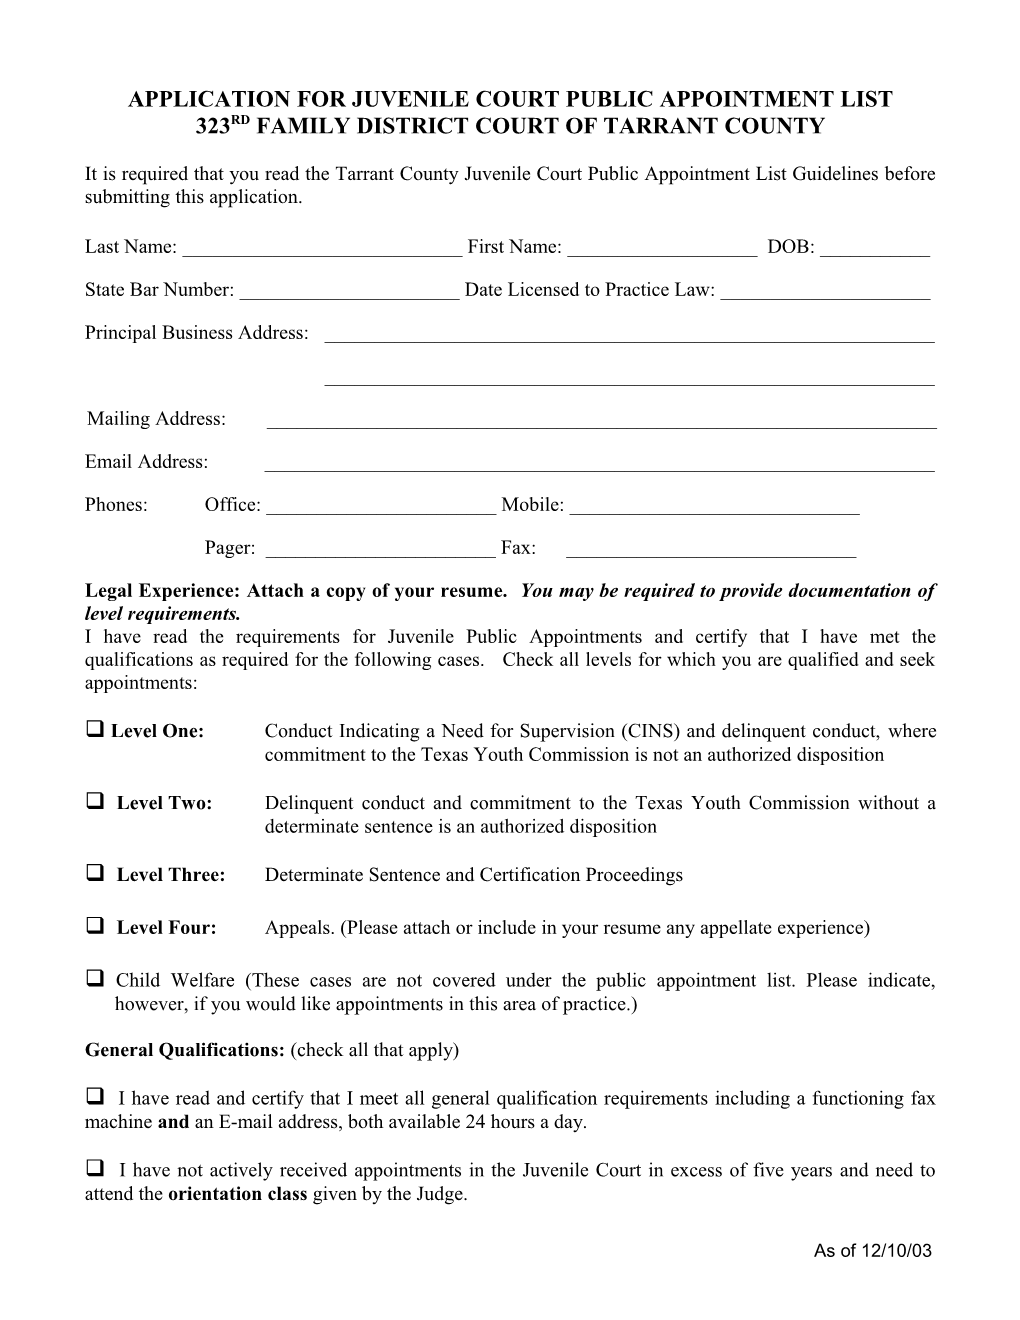 Application for Misdemeanor Public Appointment List